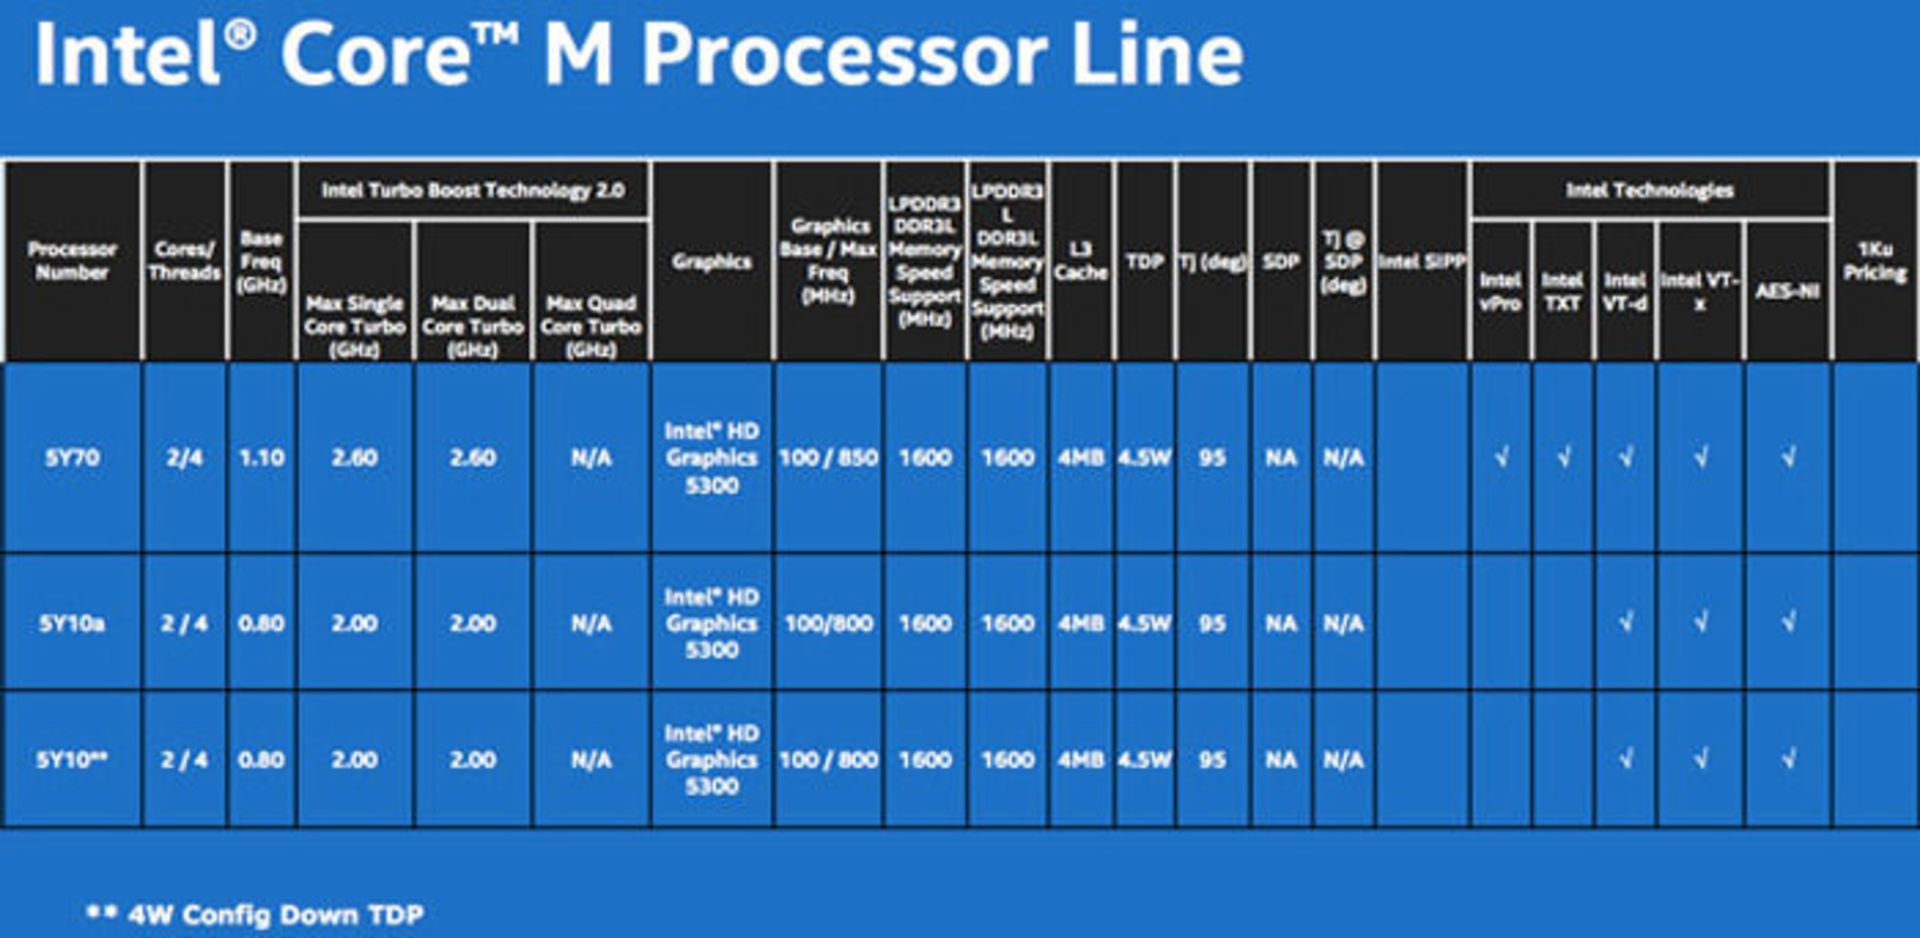 Intel Core M skus